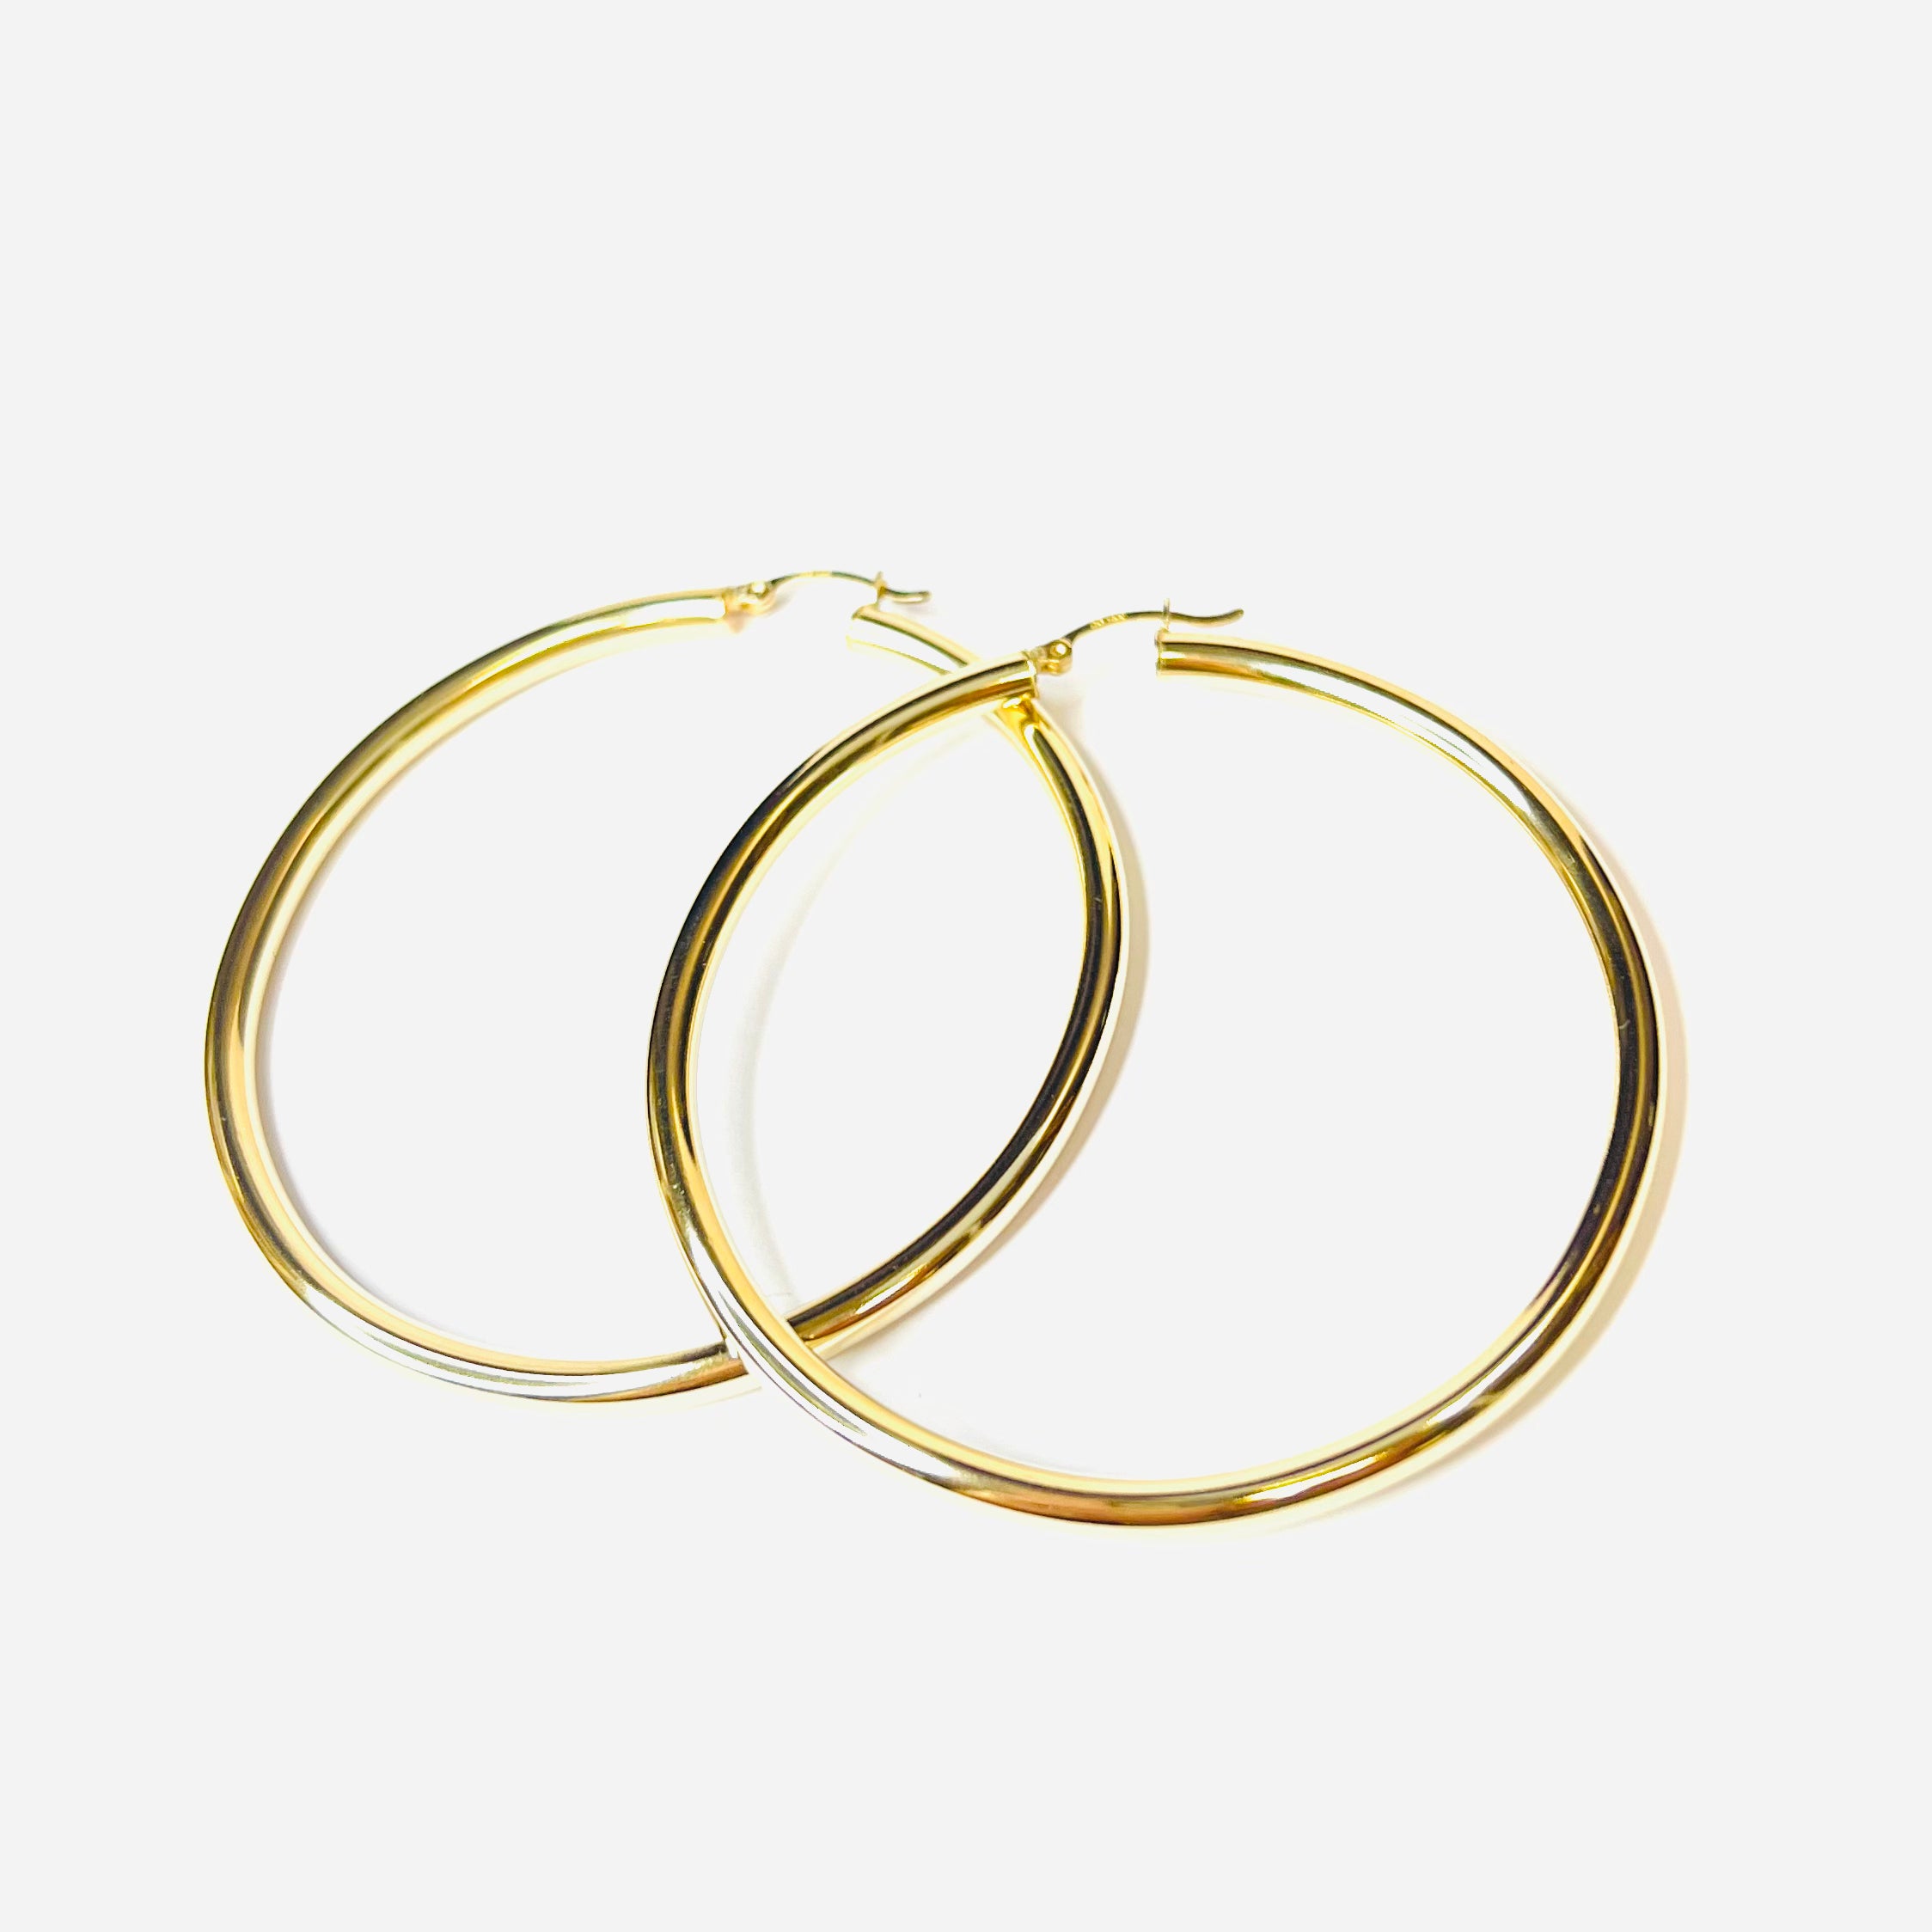 Beautiful New 14K Solid Yellow Gold Hoop Earrings 2.6"